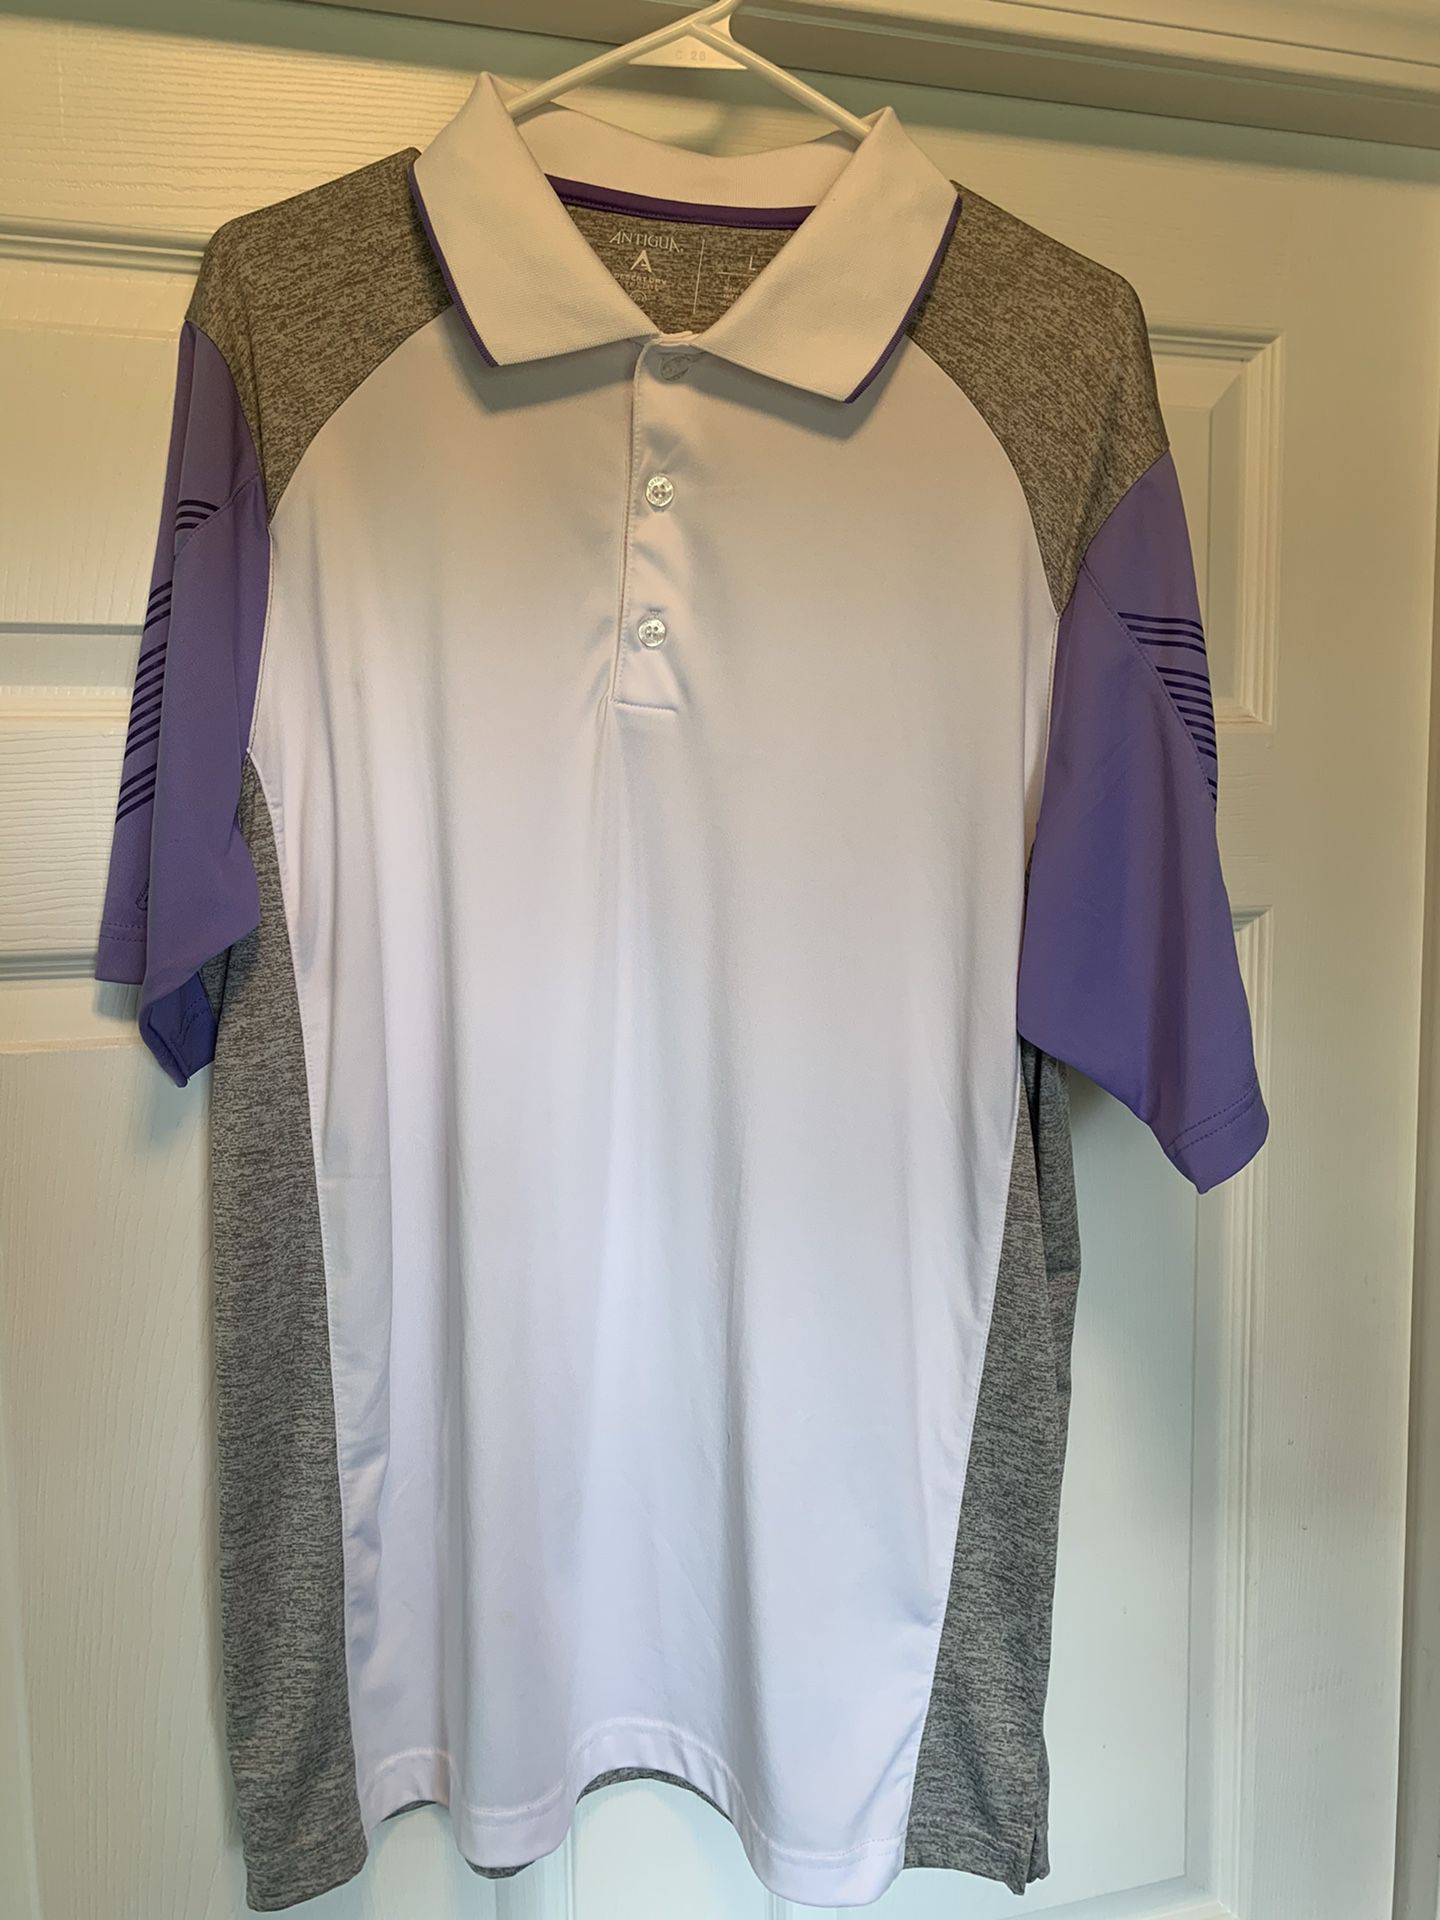 Antigua golf shirt size L